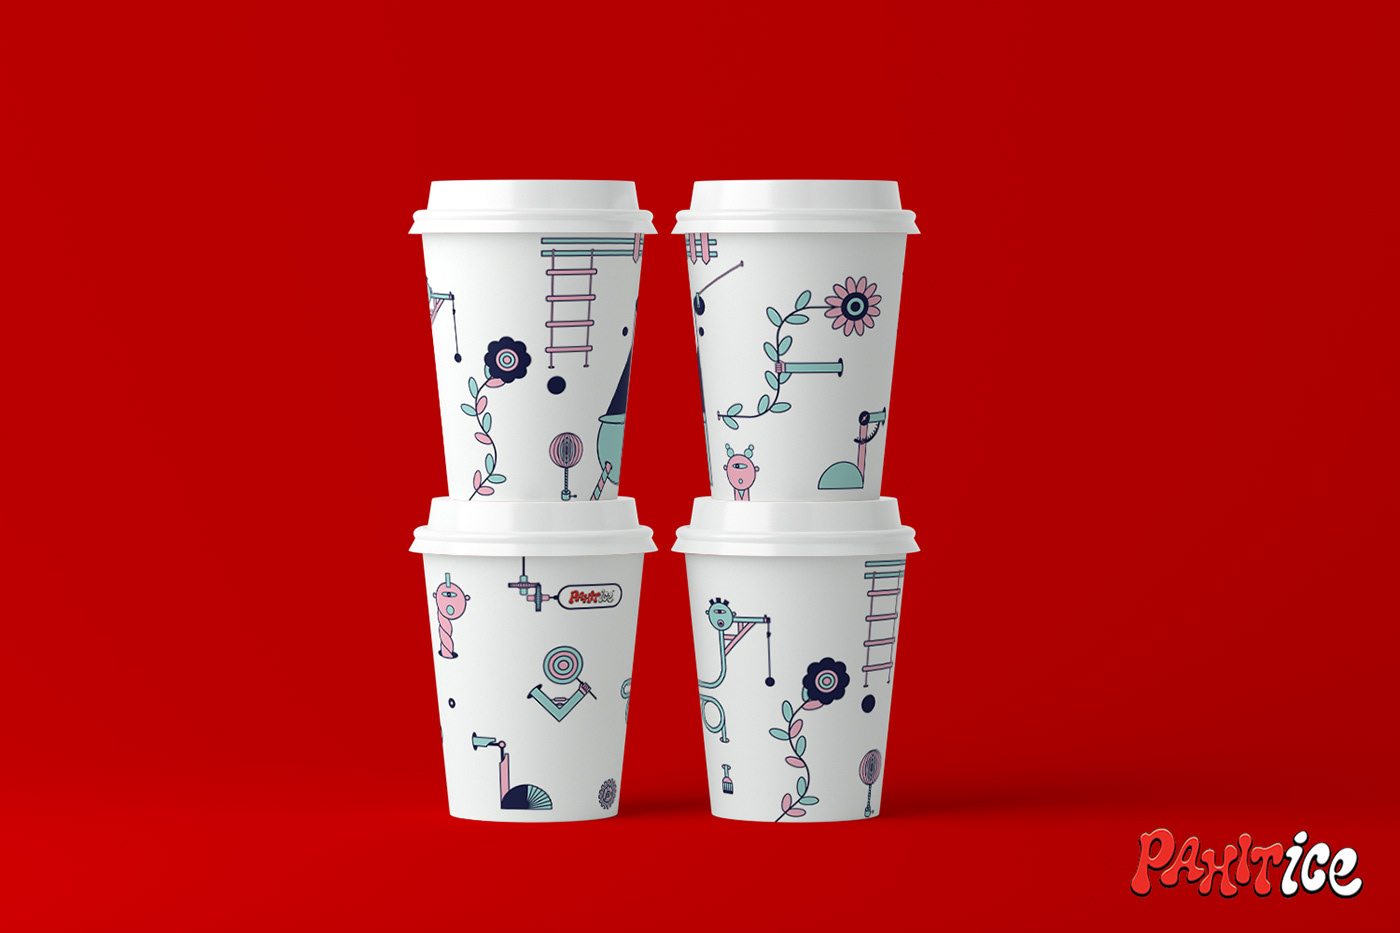 brand Coffee design drink ice cream pahit ice Paper Cup da Vinci machines ILLUSTRATION  medici